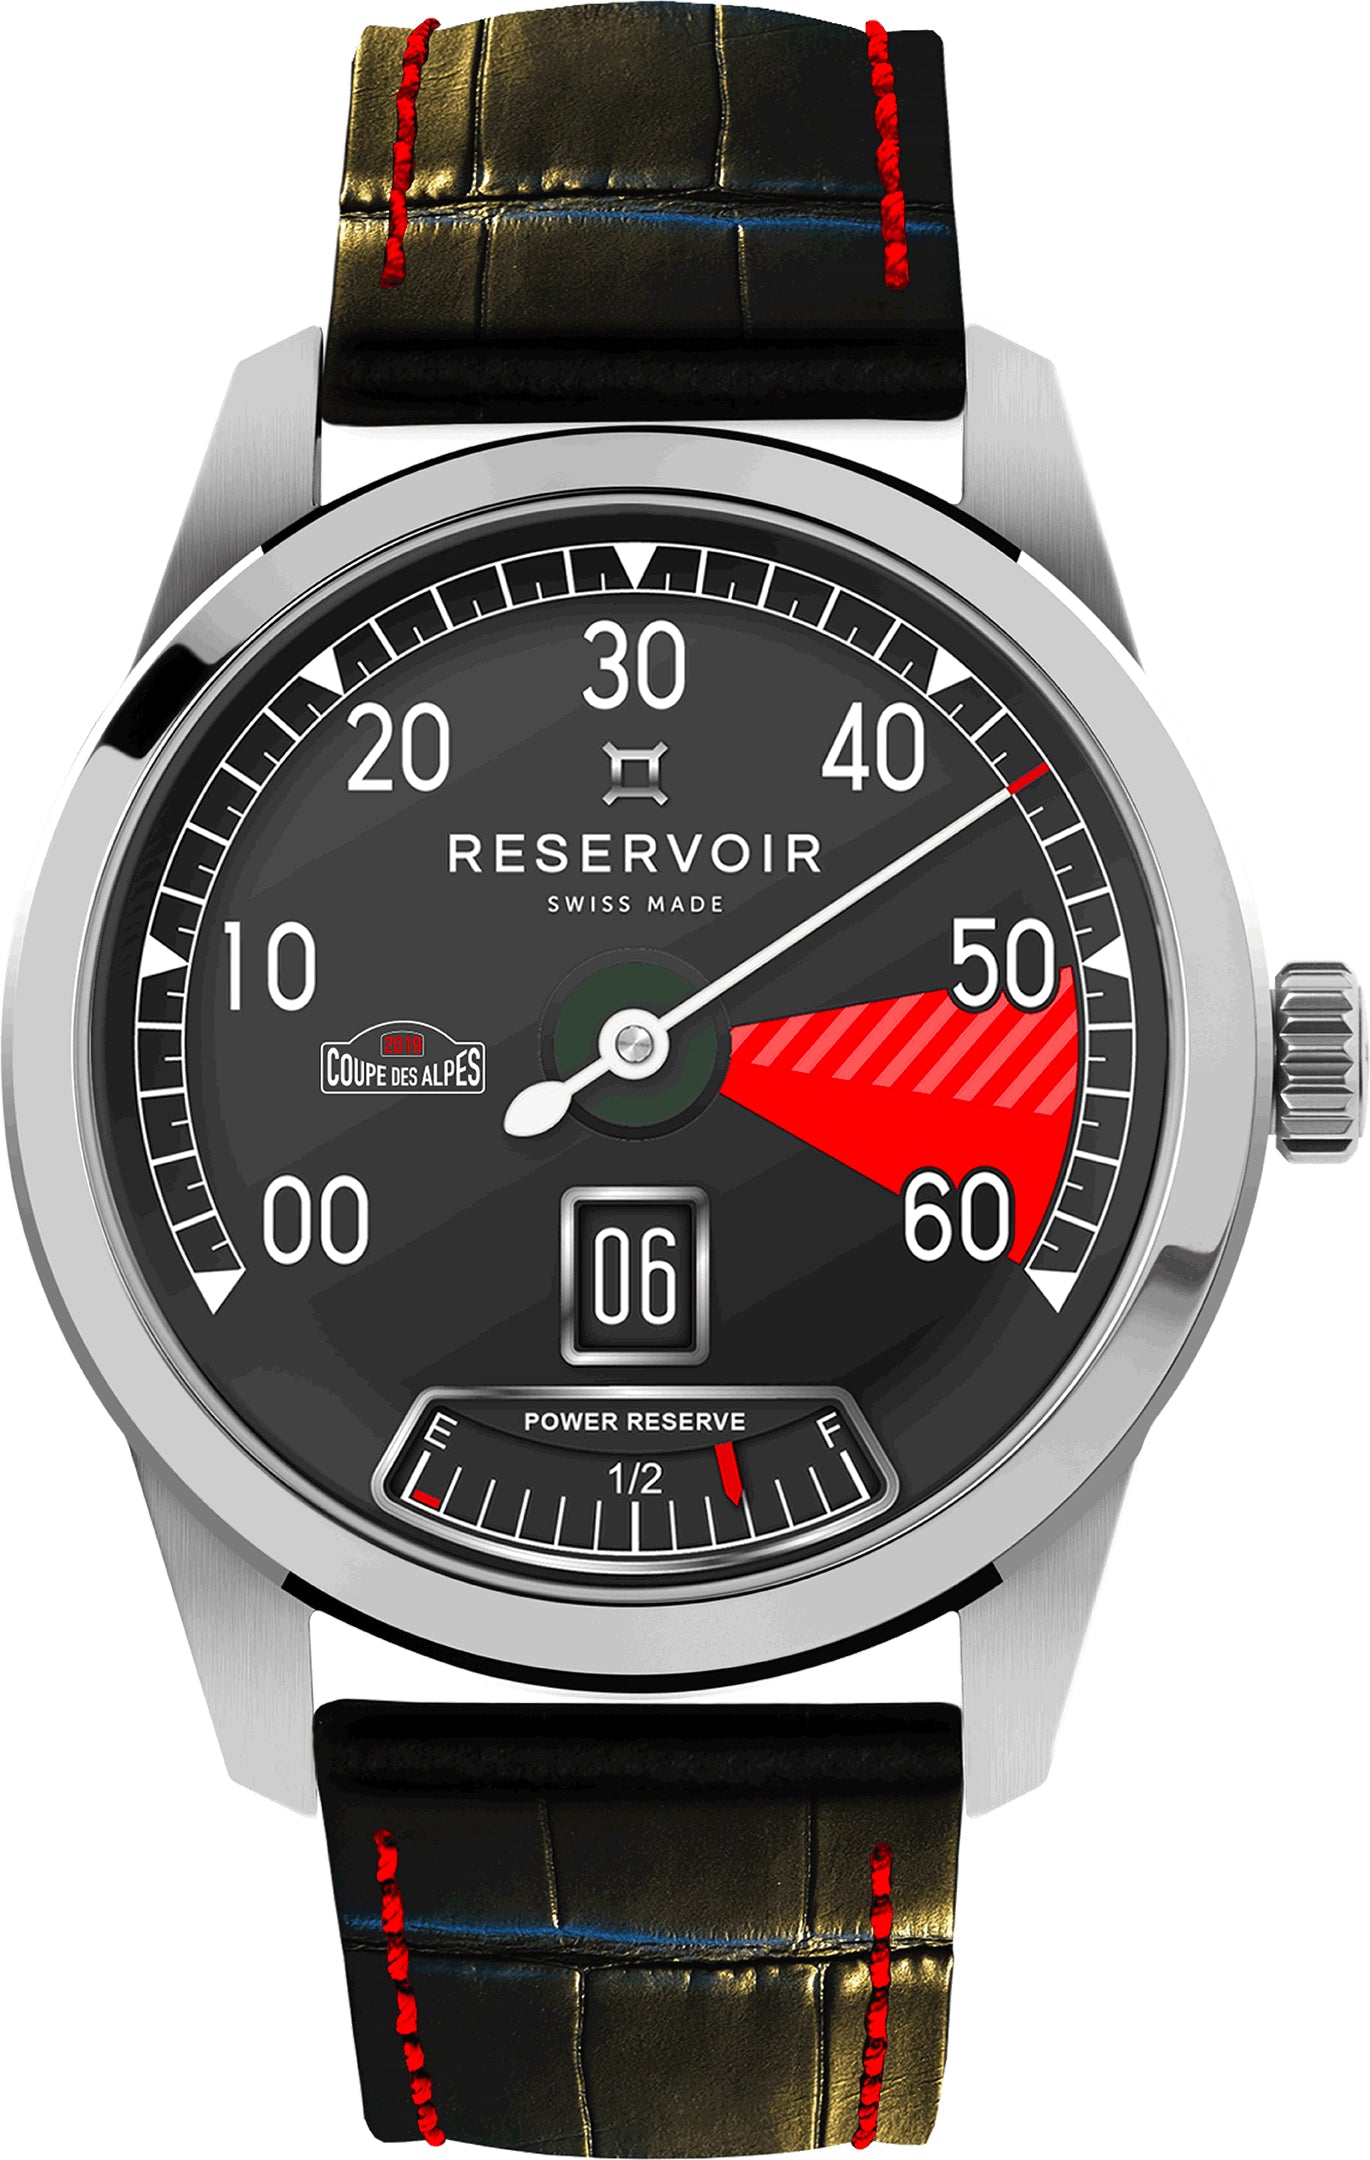 Photos - Wrist Watch Reservoir Watch Supercharged Coupe des Alpes Limited Edition RSV-047